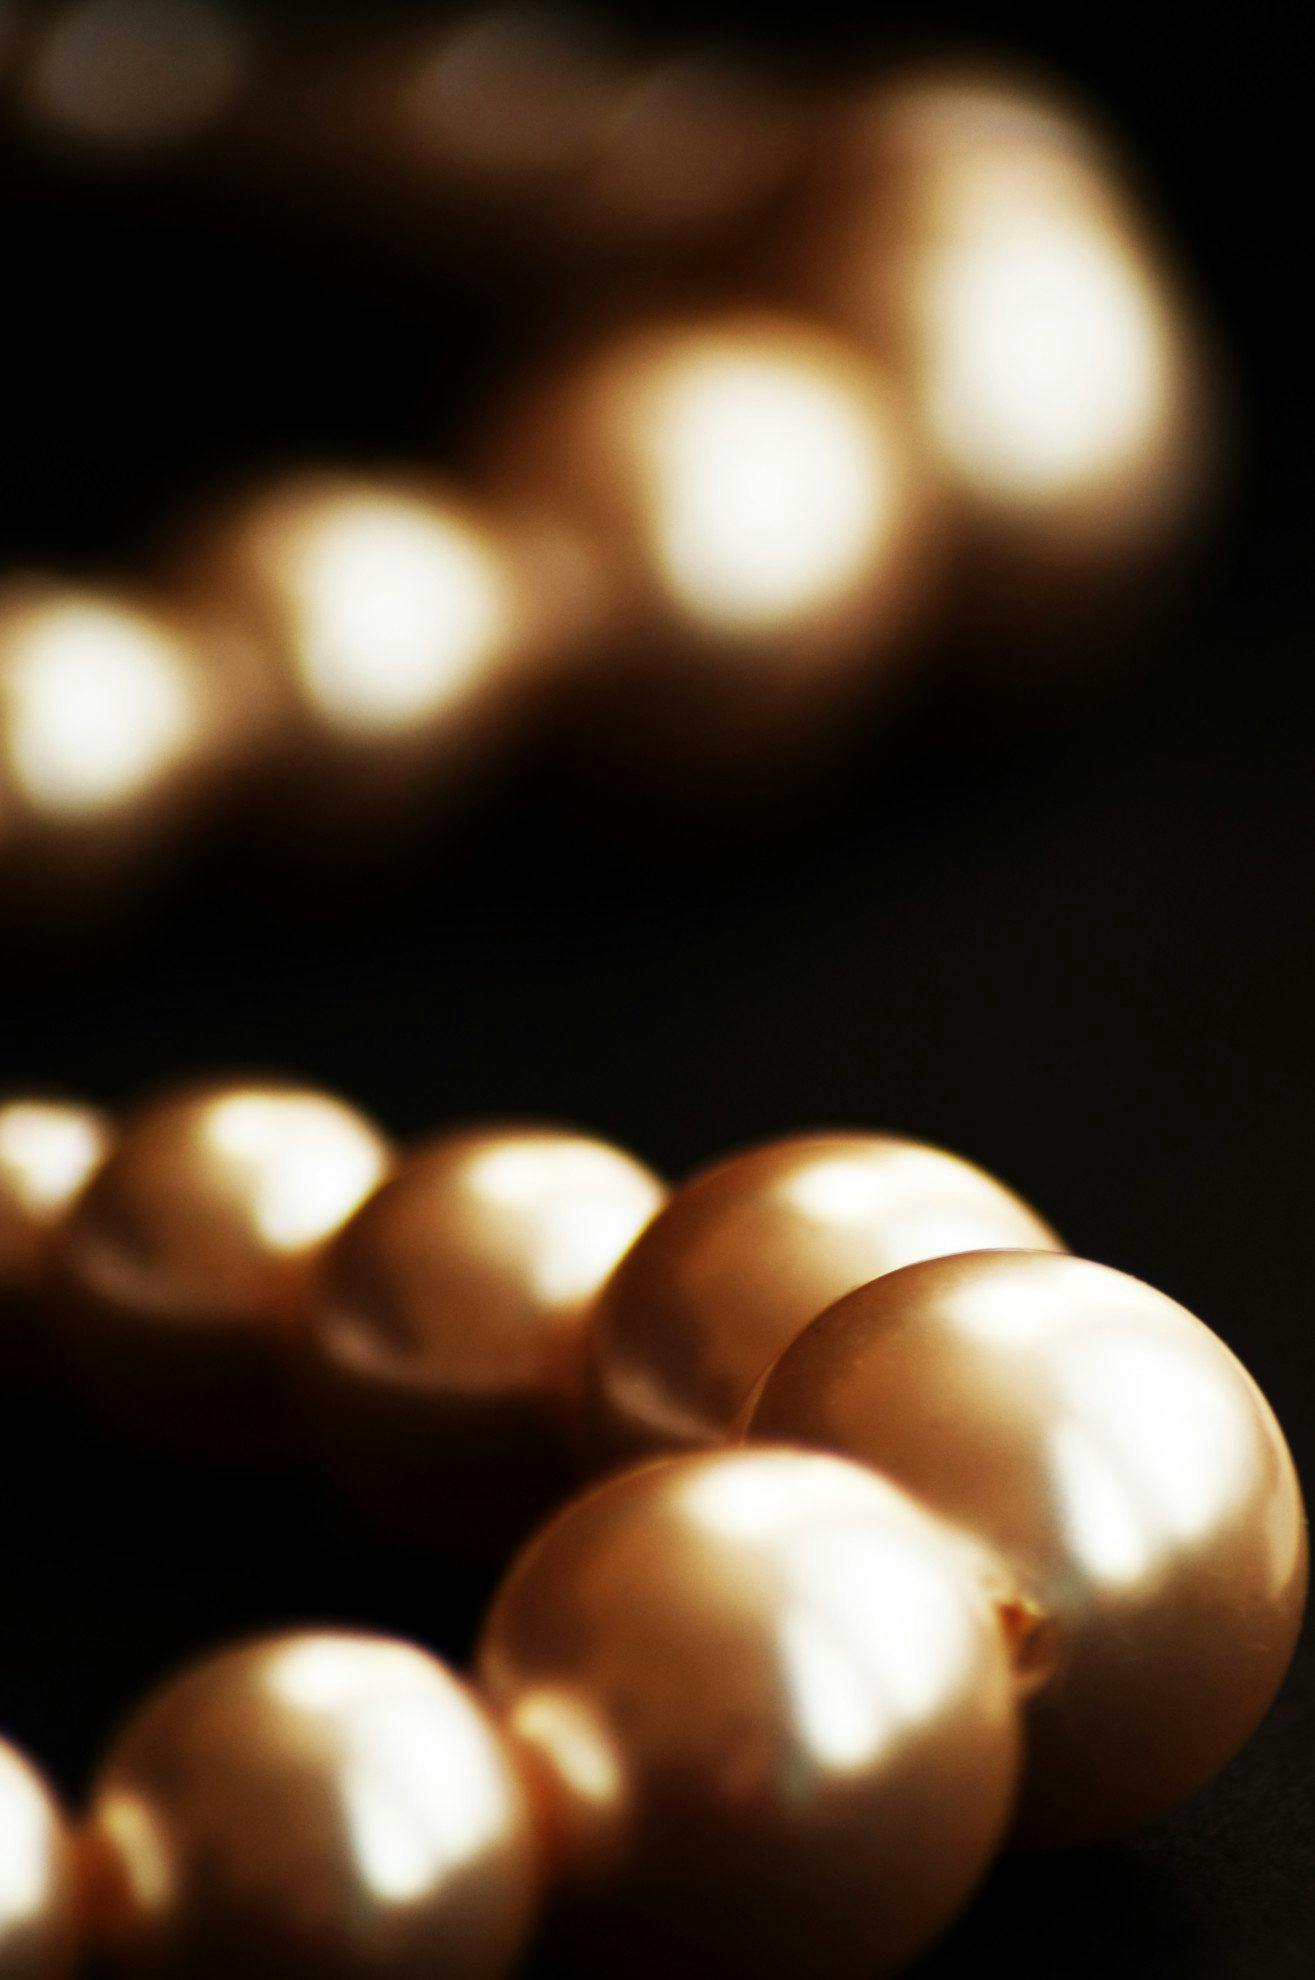 golden pearls - appraising pearls